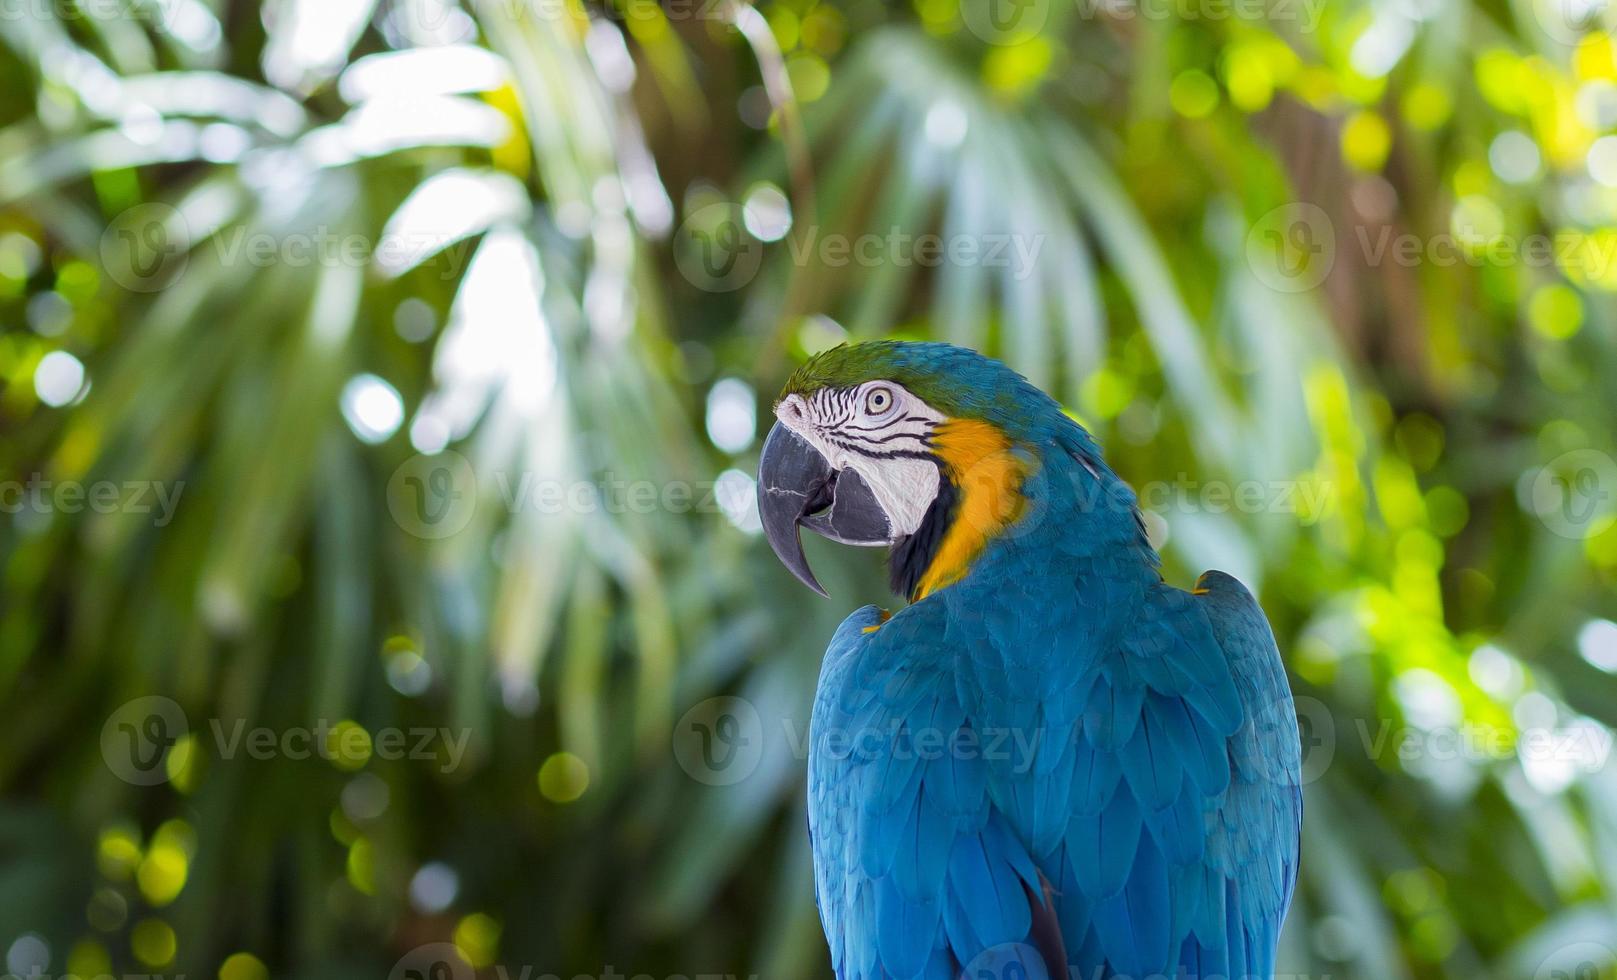 Macaw Close Up photo